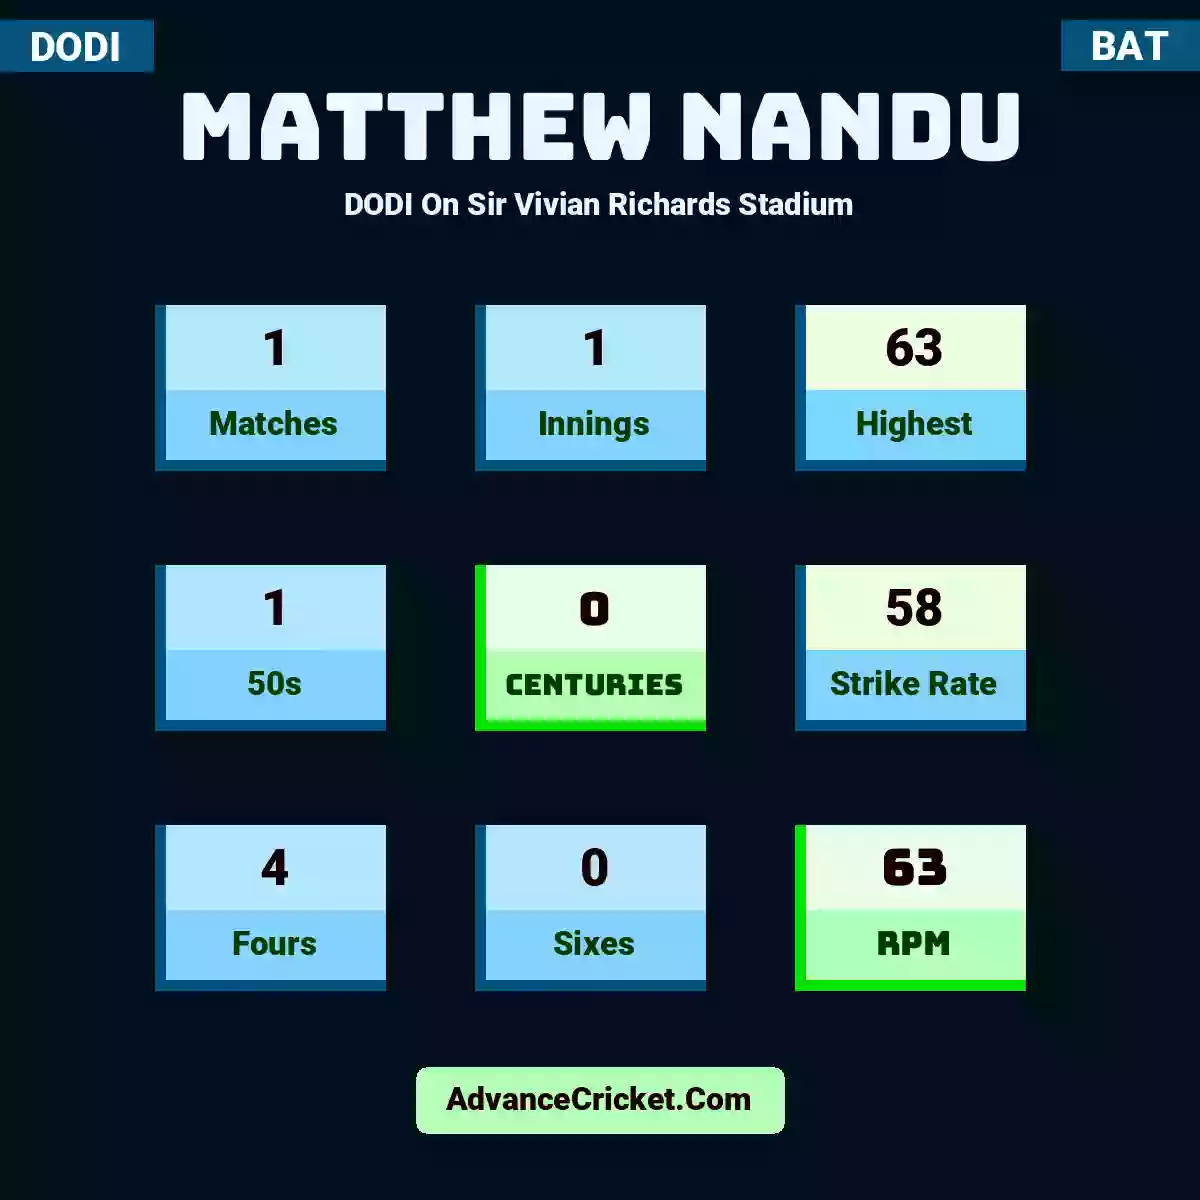 Matthew Nandu DODI  On Sir Vivian Richards Stadium, Matthew Nandu played 1 matches, scored 63 runs as highest, 1 half-centuries, and 0 centuries, with a strike rate of 58. M.Nandu hit 4 fours and 0 sixes, with an RPM of 63.